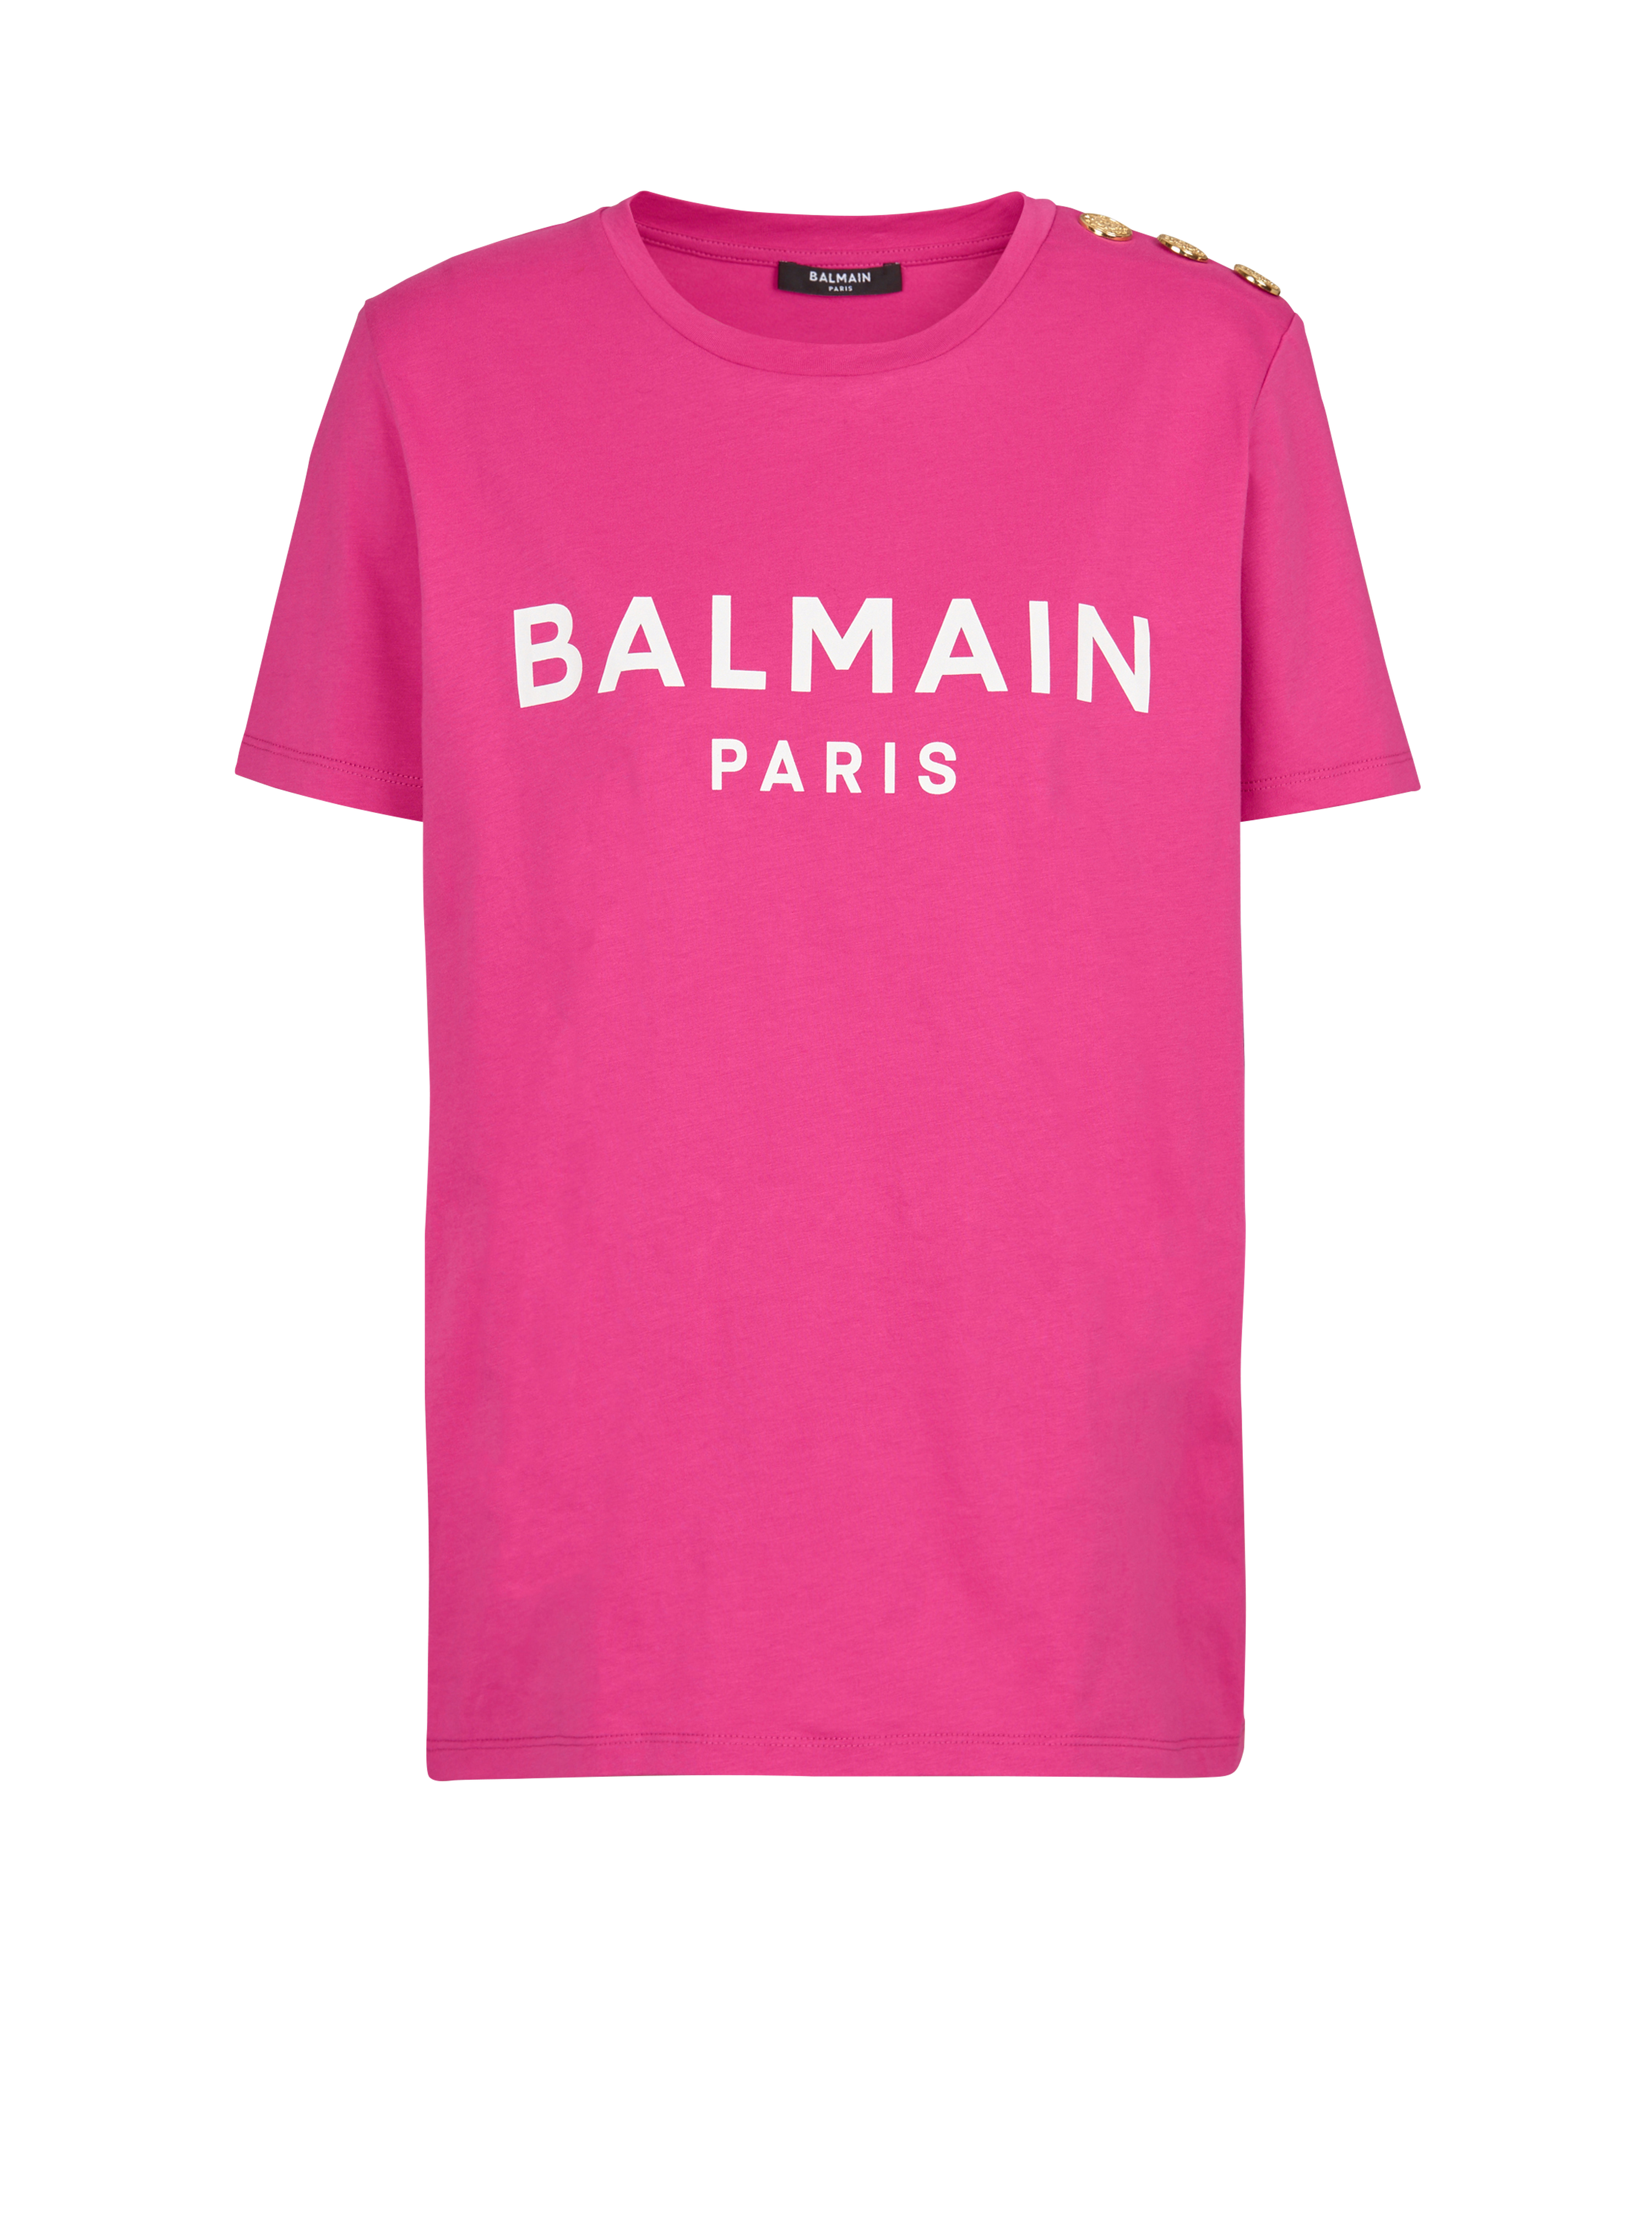 Cotton printed Balmain logo T-shirt, pink